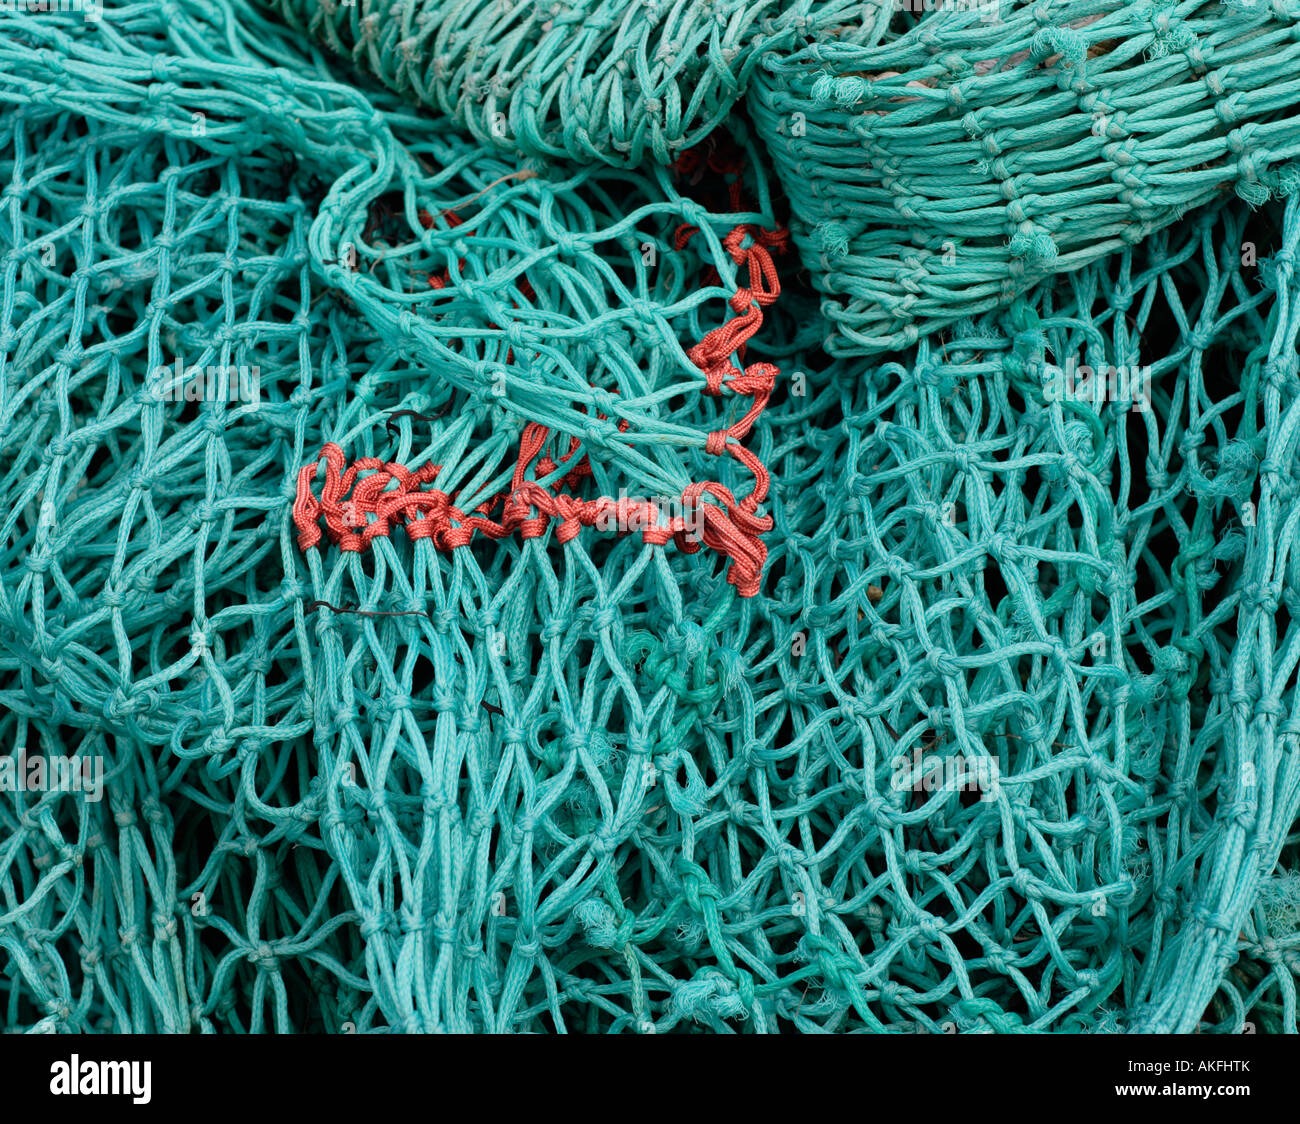 Detail of deep sea fishing nets Stock Photo - Alamy